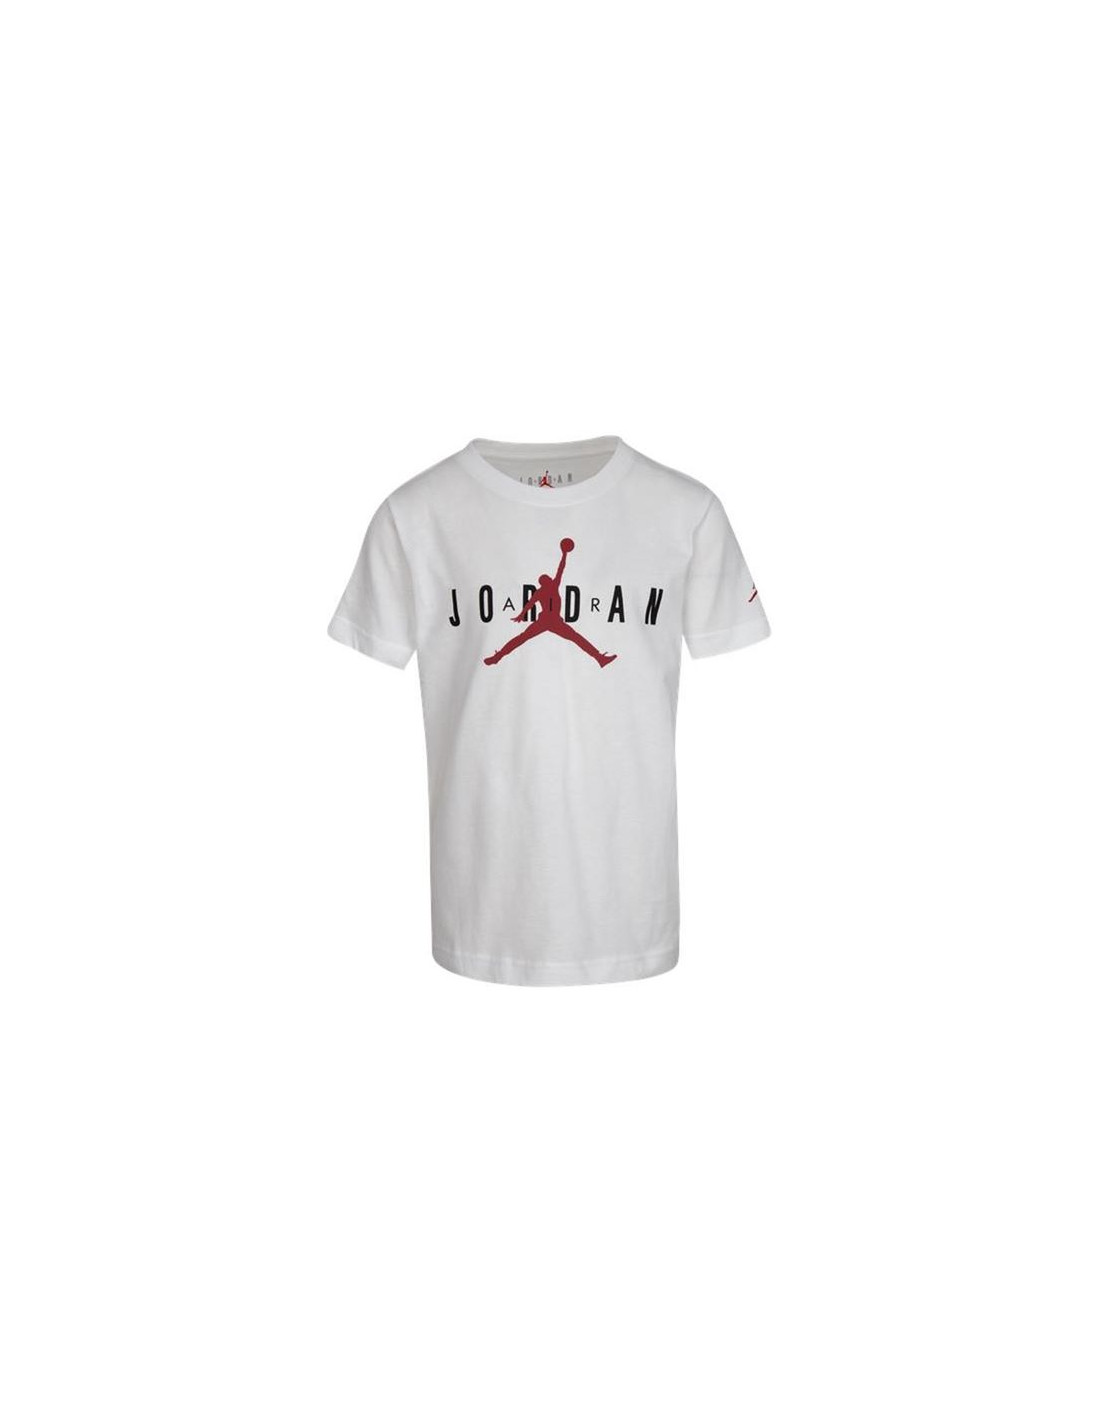 Camiseta jordan brand 5 white